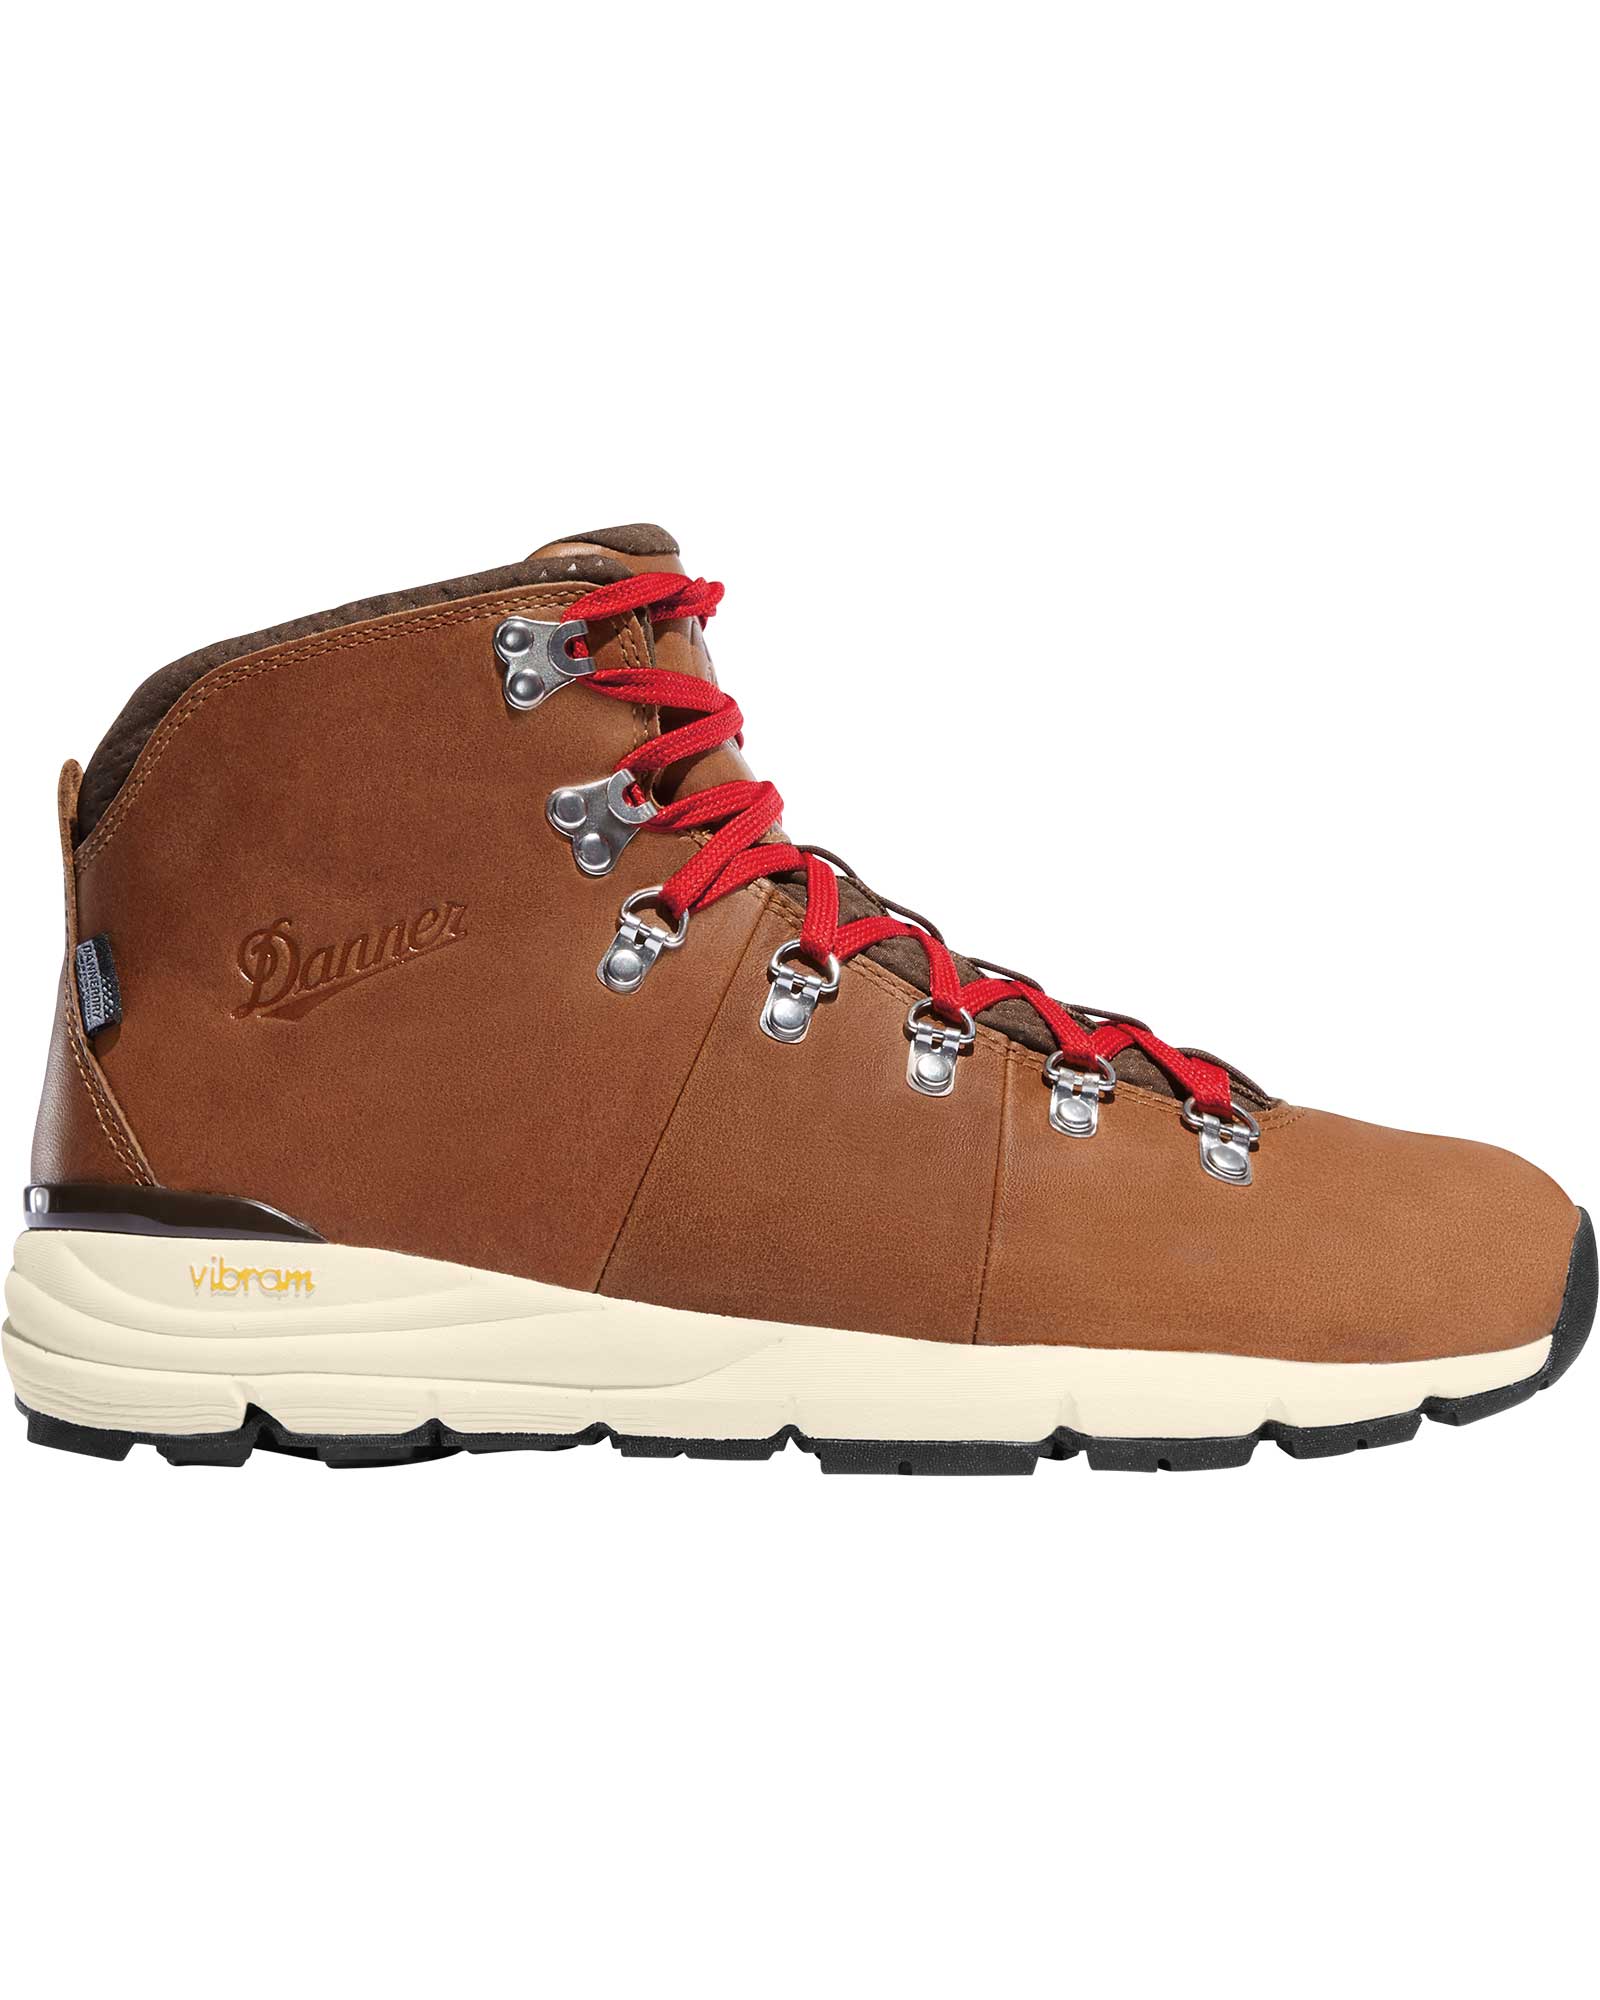 Danner Men’s Mountain 600 4.5" Boots - Saddle Tan UK 8